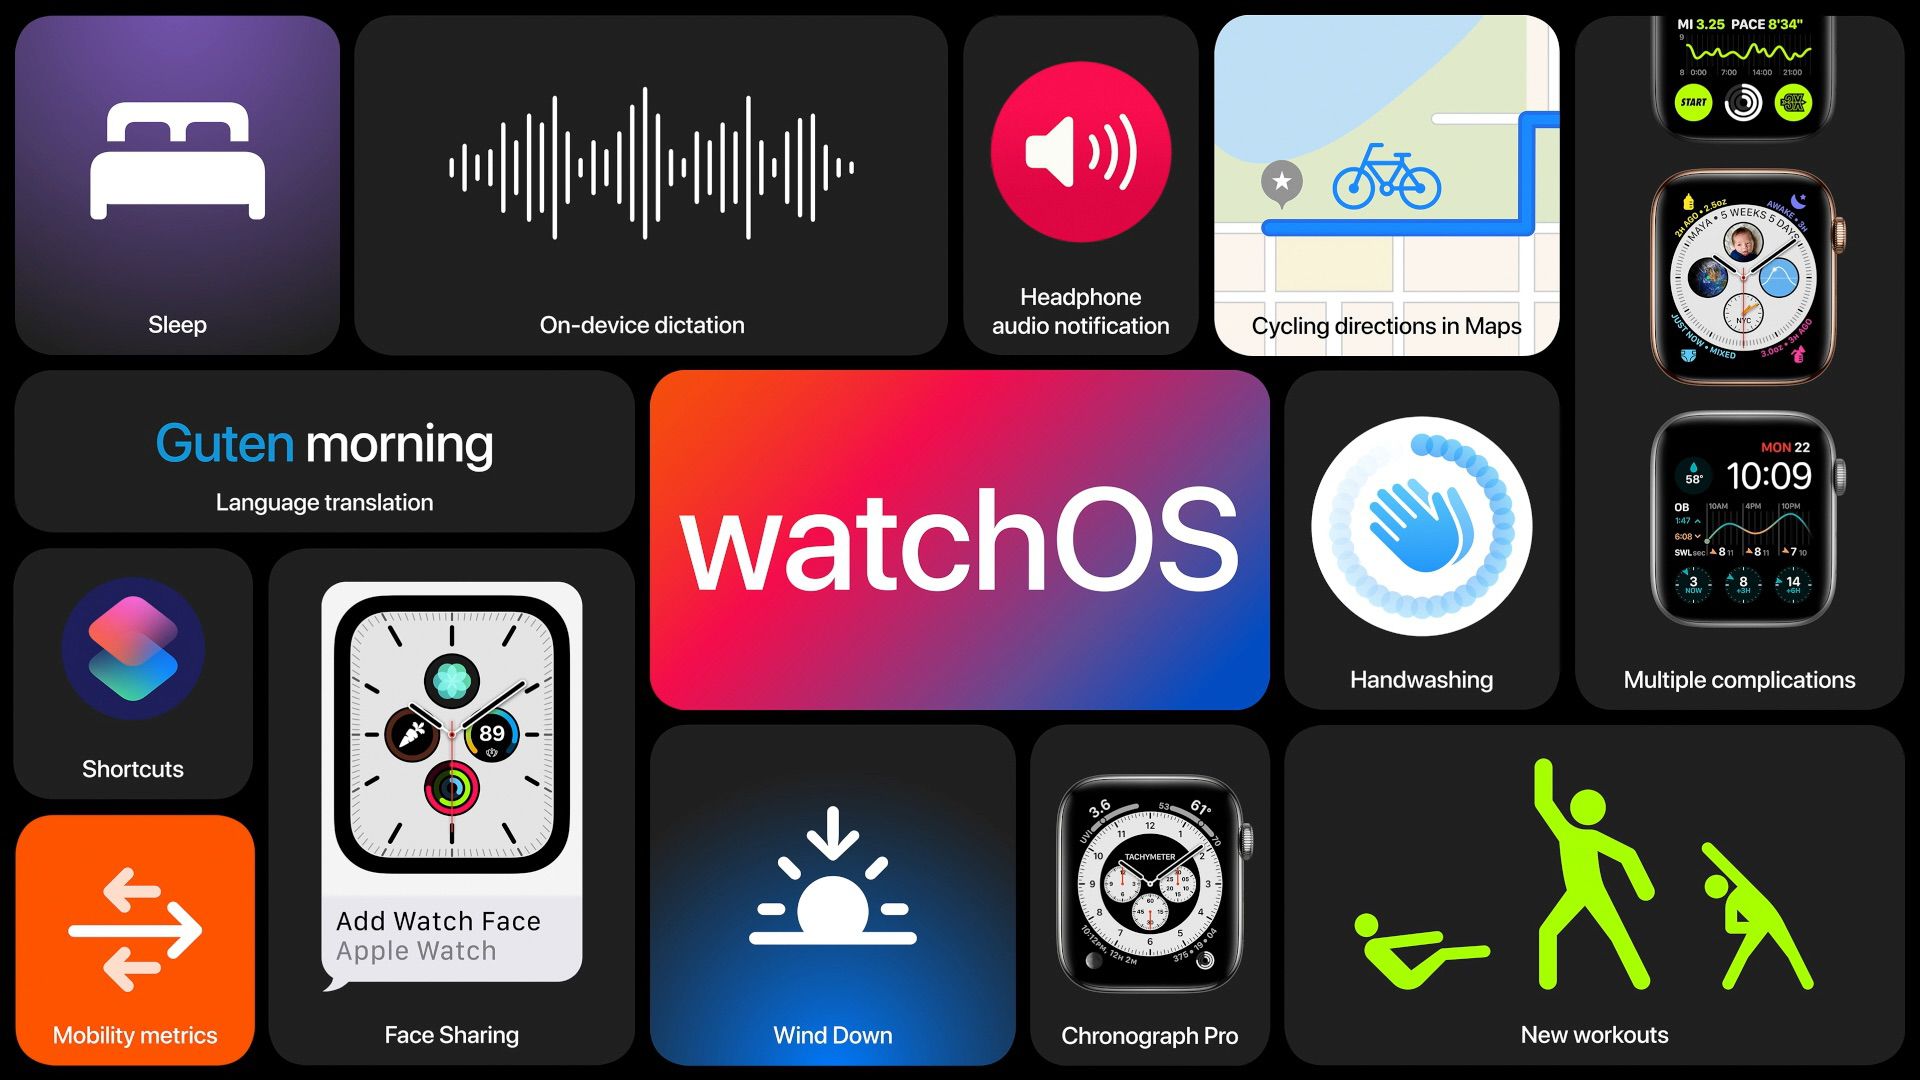 watchOS 7 for Apple Watch